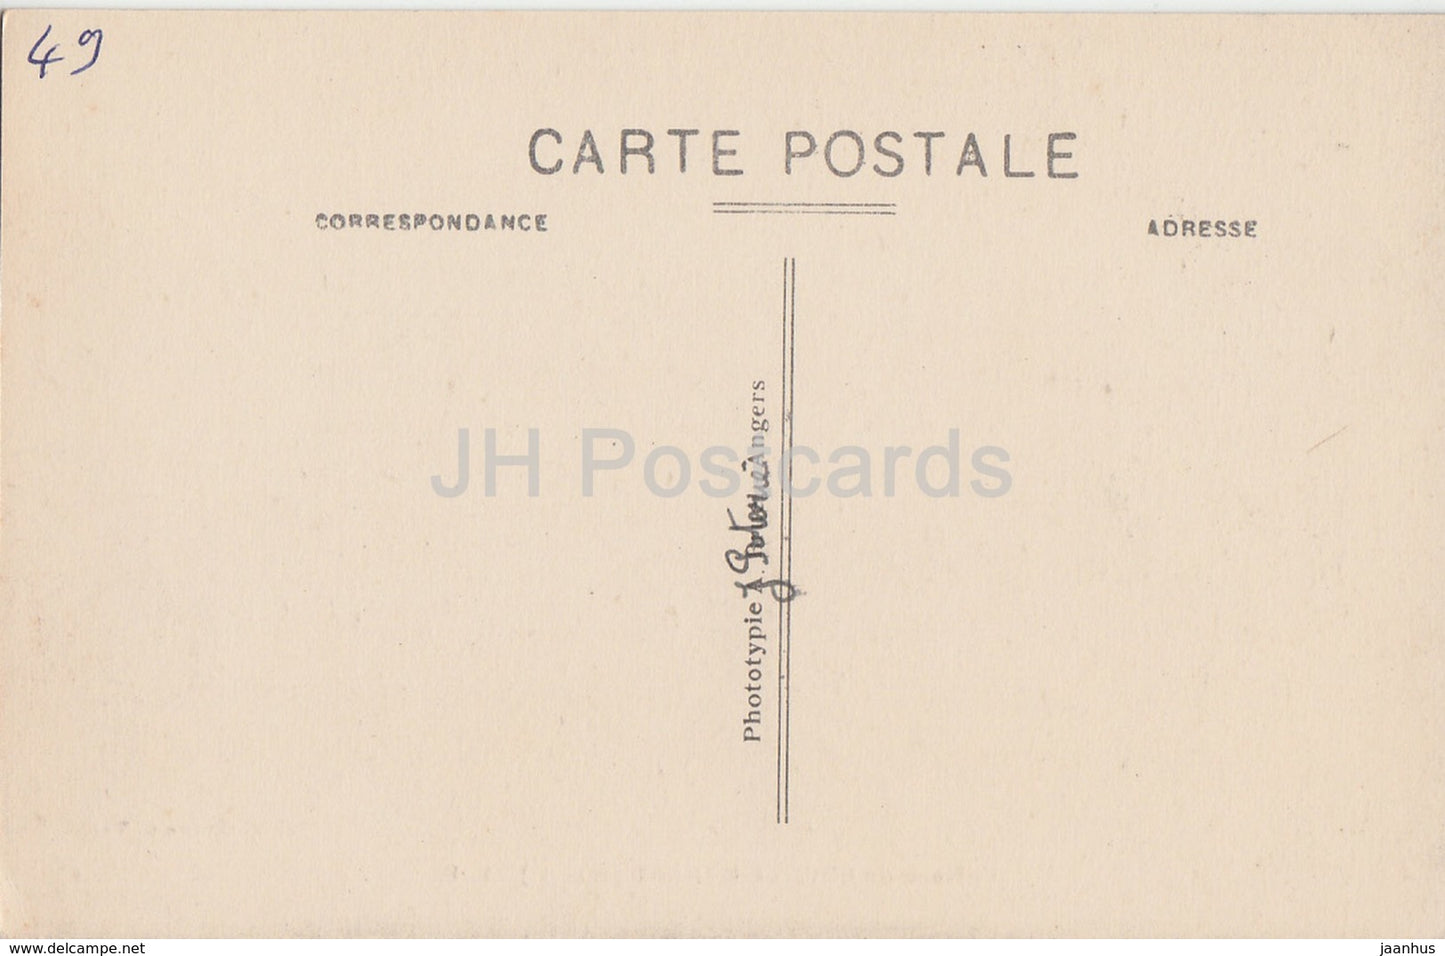 Chateau de Bouille Menard - castle - old postcard - France - unused